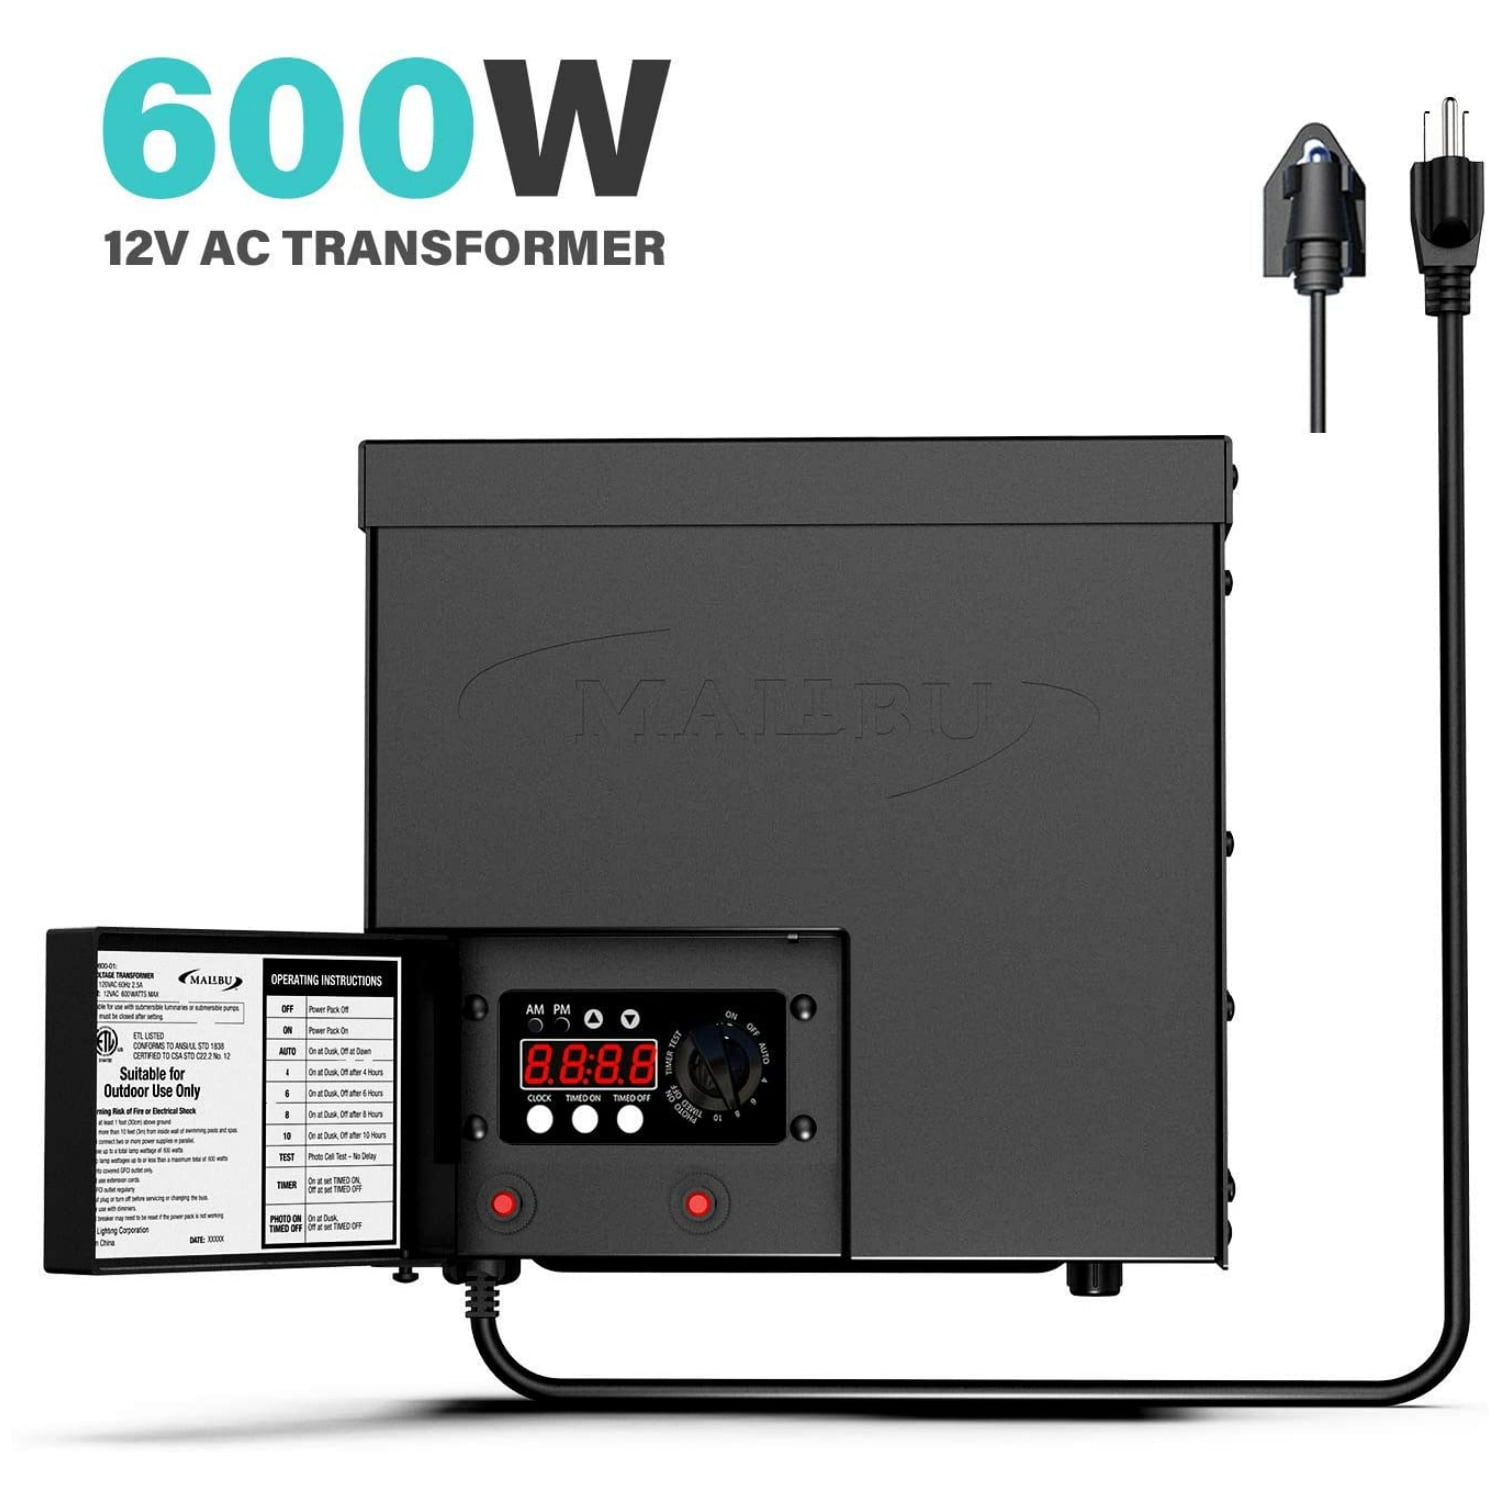 600W Low Voltage LED Transformer